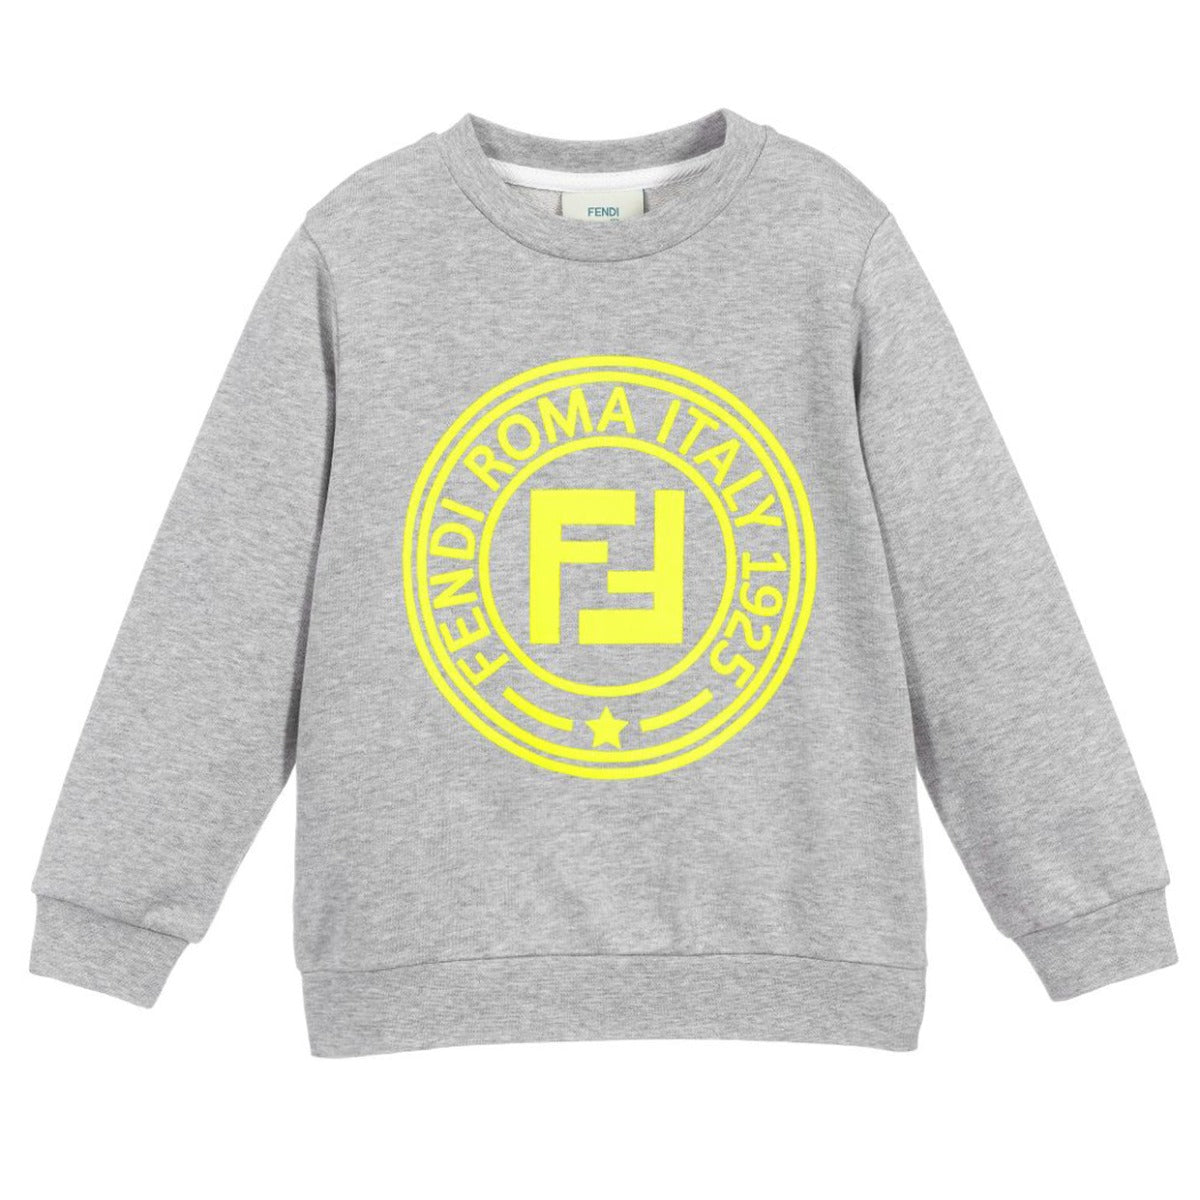 Fendi Junior Grey Roma Stamp Sweatshirt Front 